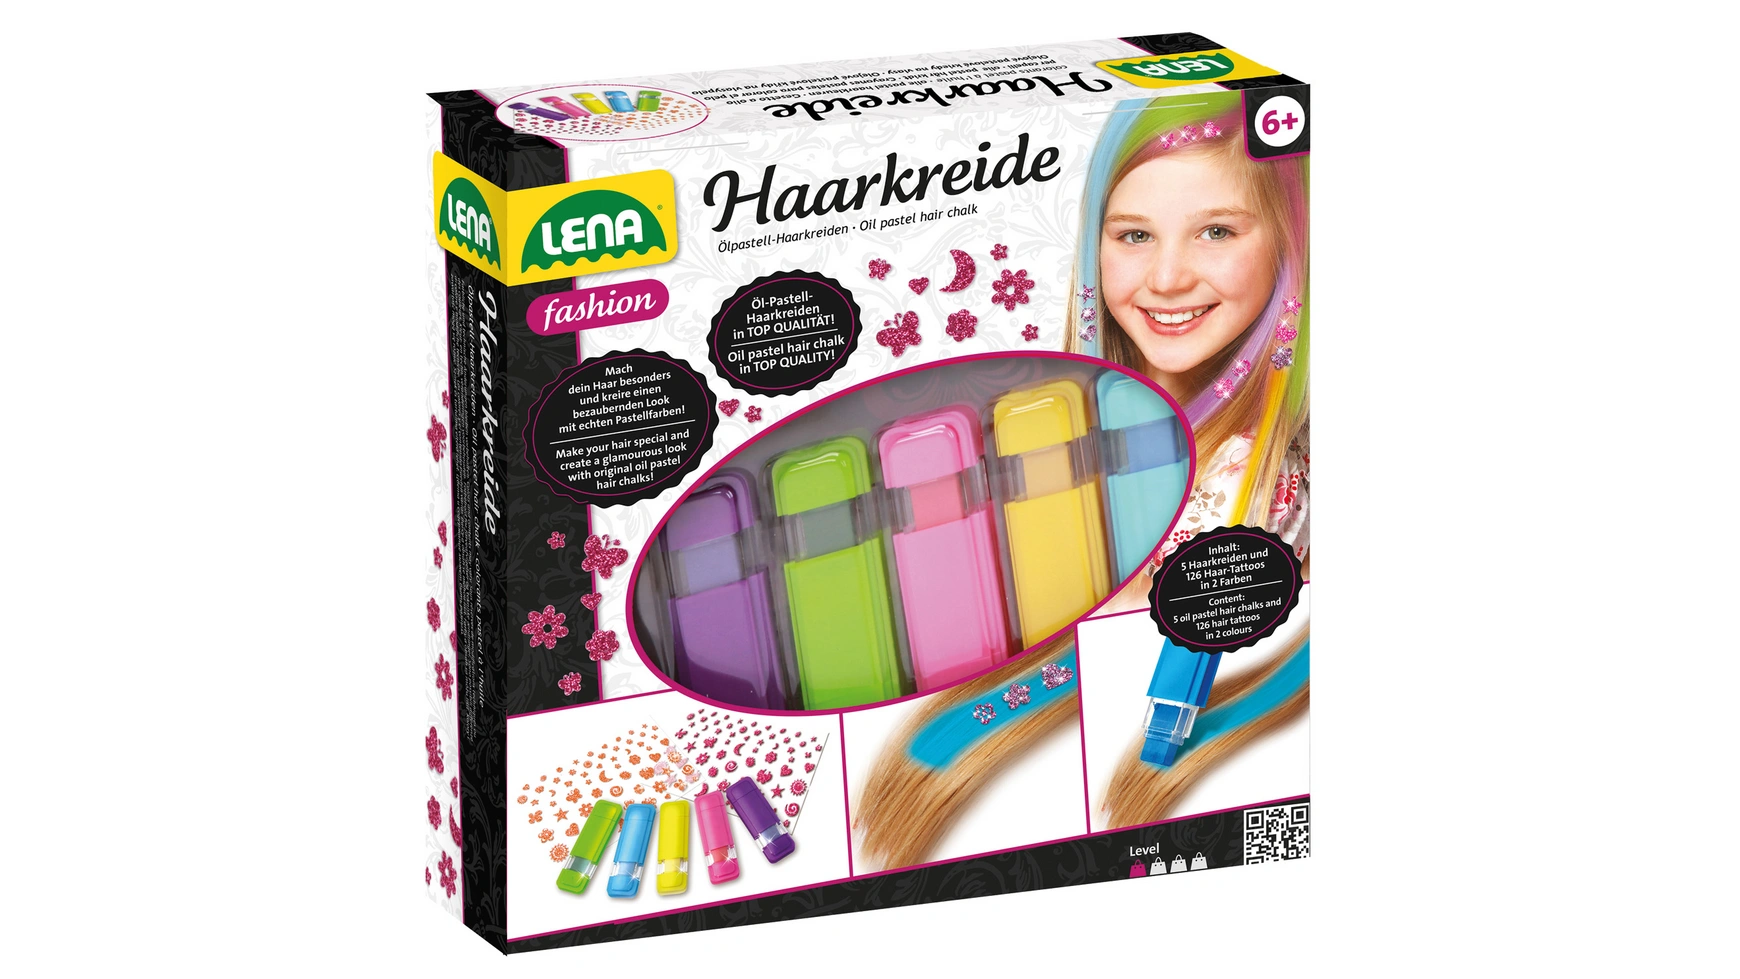 Мода мел для волос Lena fashion easy temporary colors non toxic hair chalk dye soft hair pastels kit